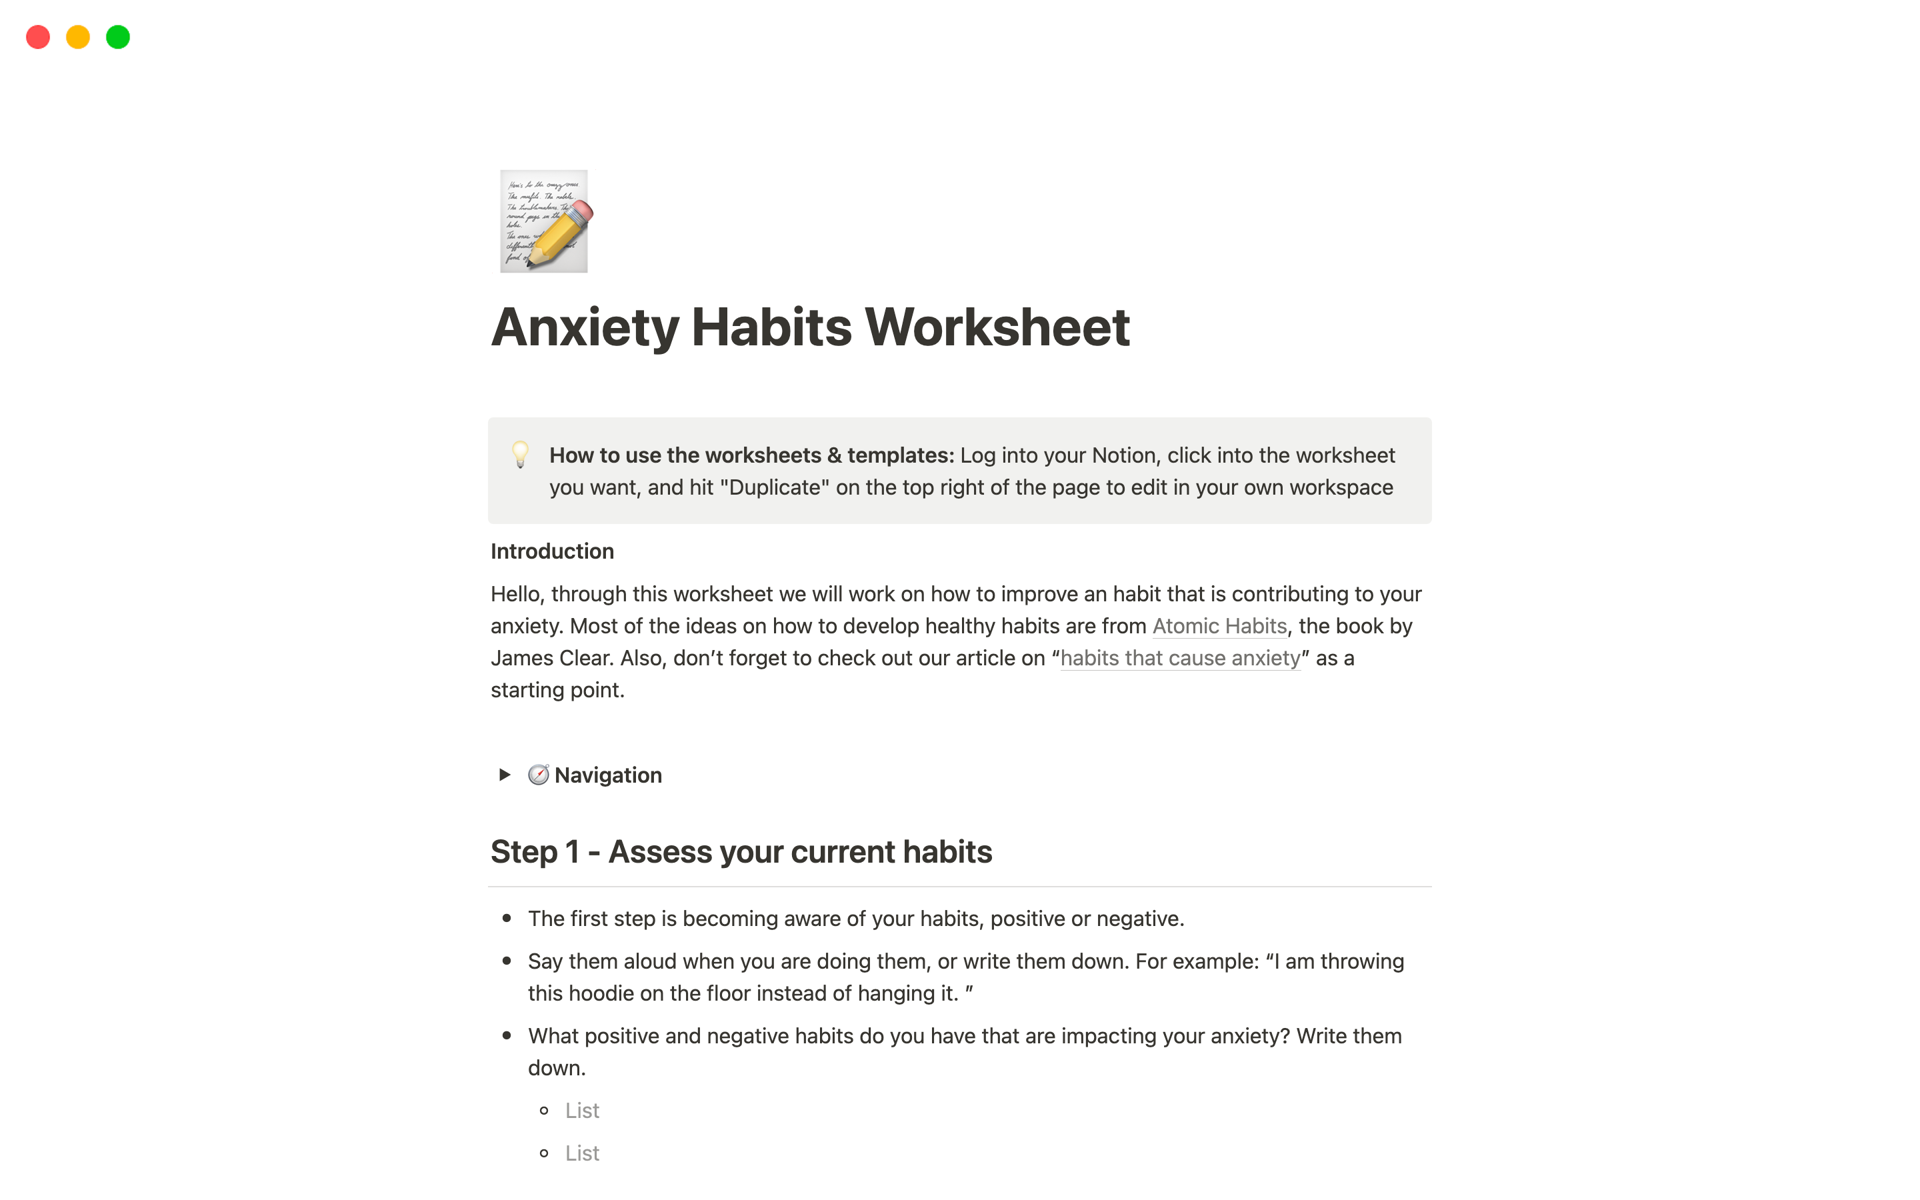 Vista previa de plantilla para Anxiety Habits Worksheet